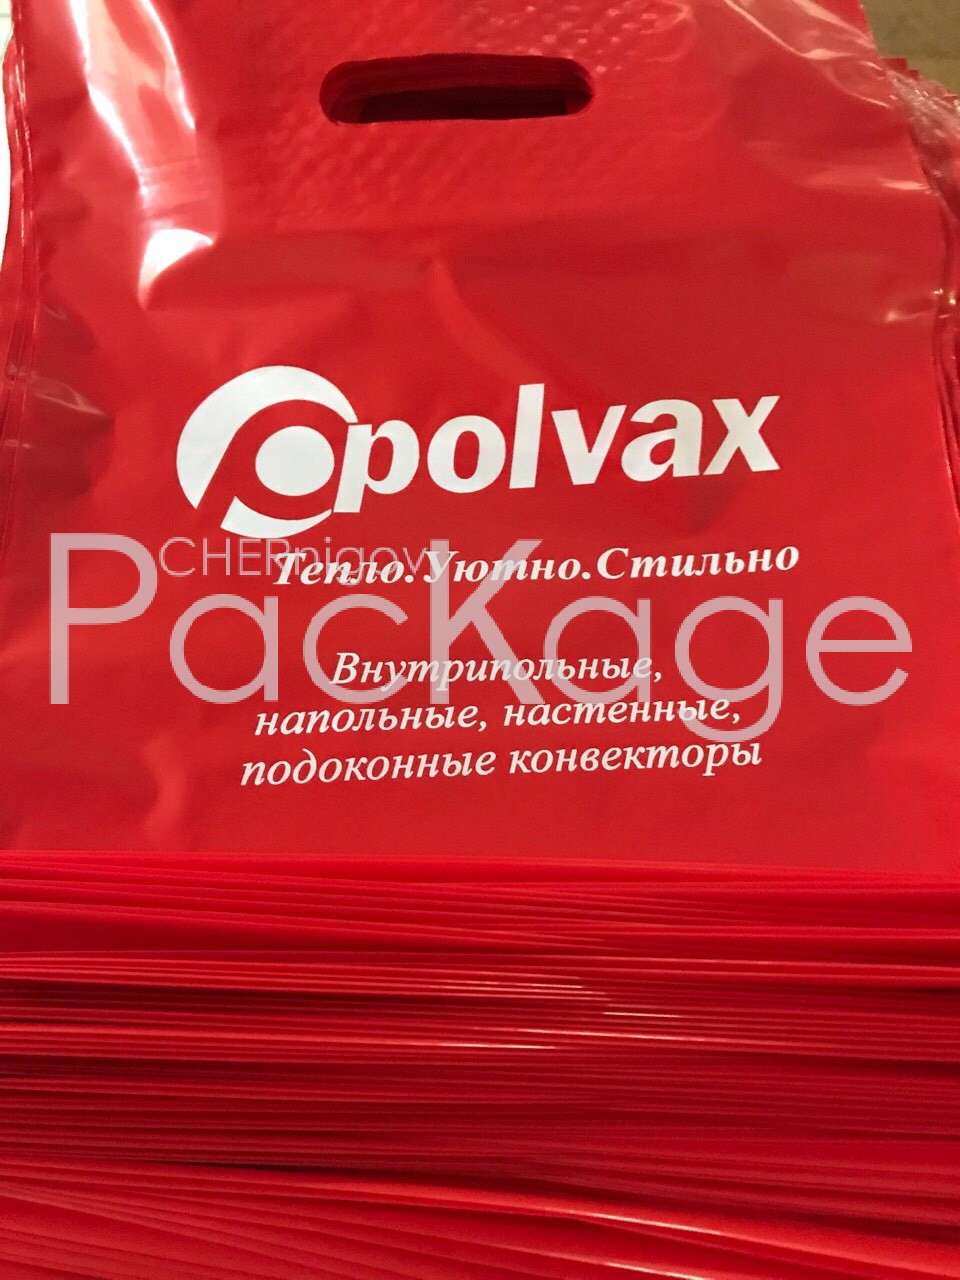 Как заказать пакеты банан в Киеве Chernigov Package - Photo image_6483441-8